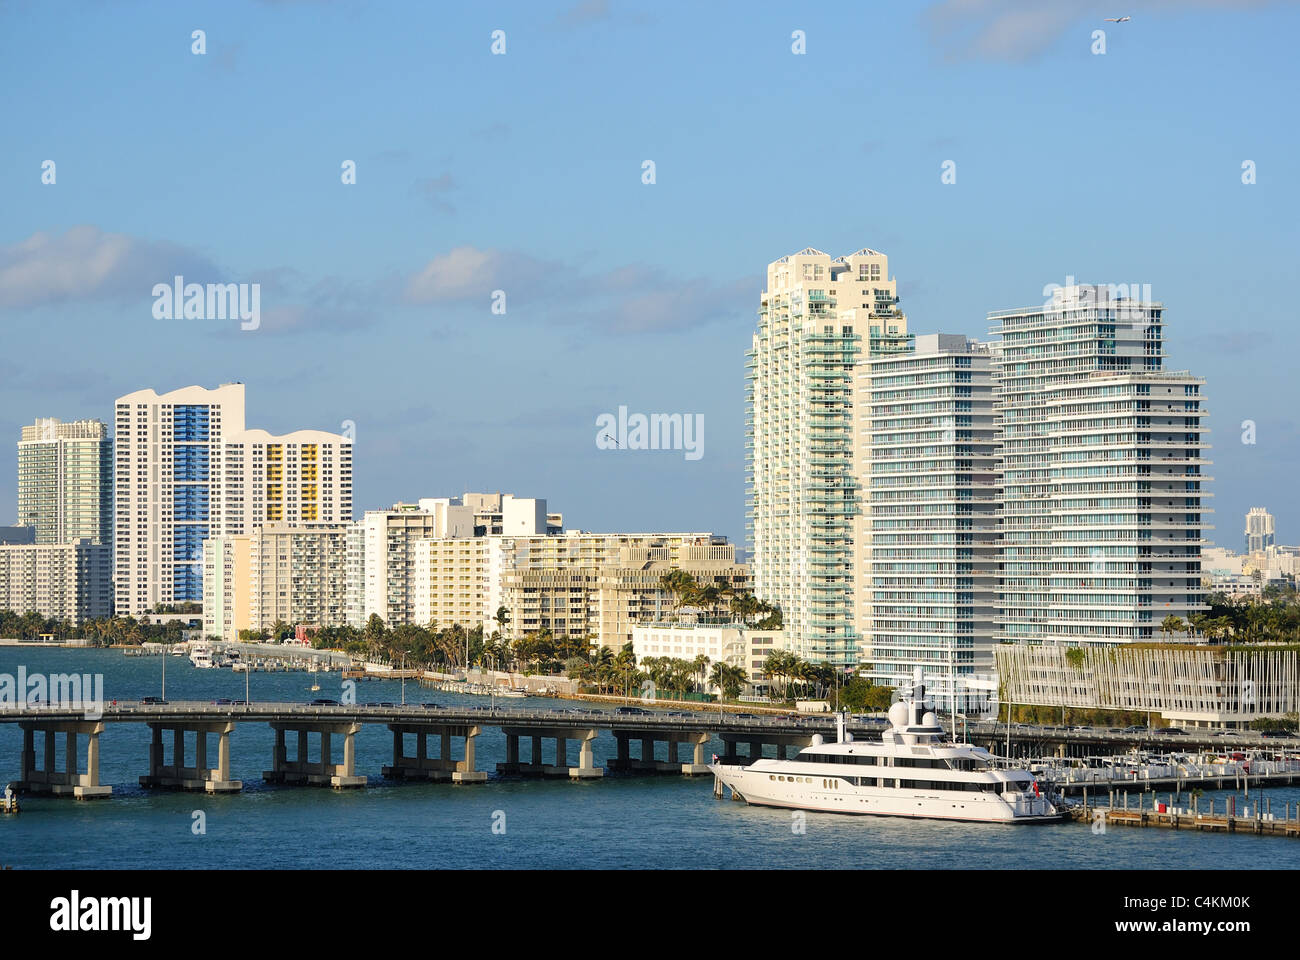 The skyline of Miami, Florida with Star Island. Stock Photo